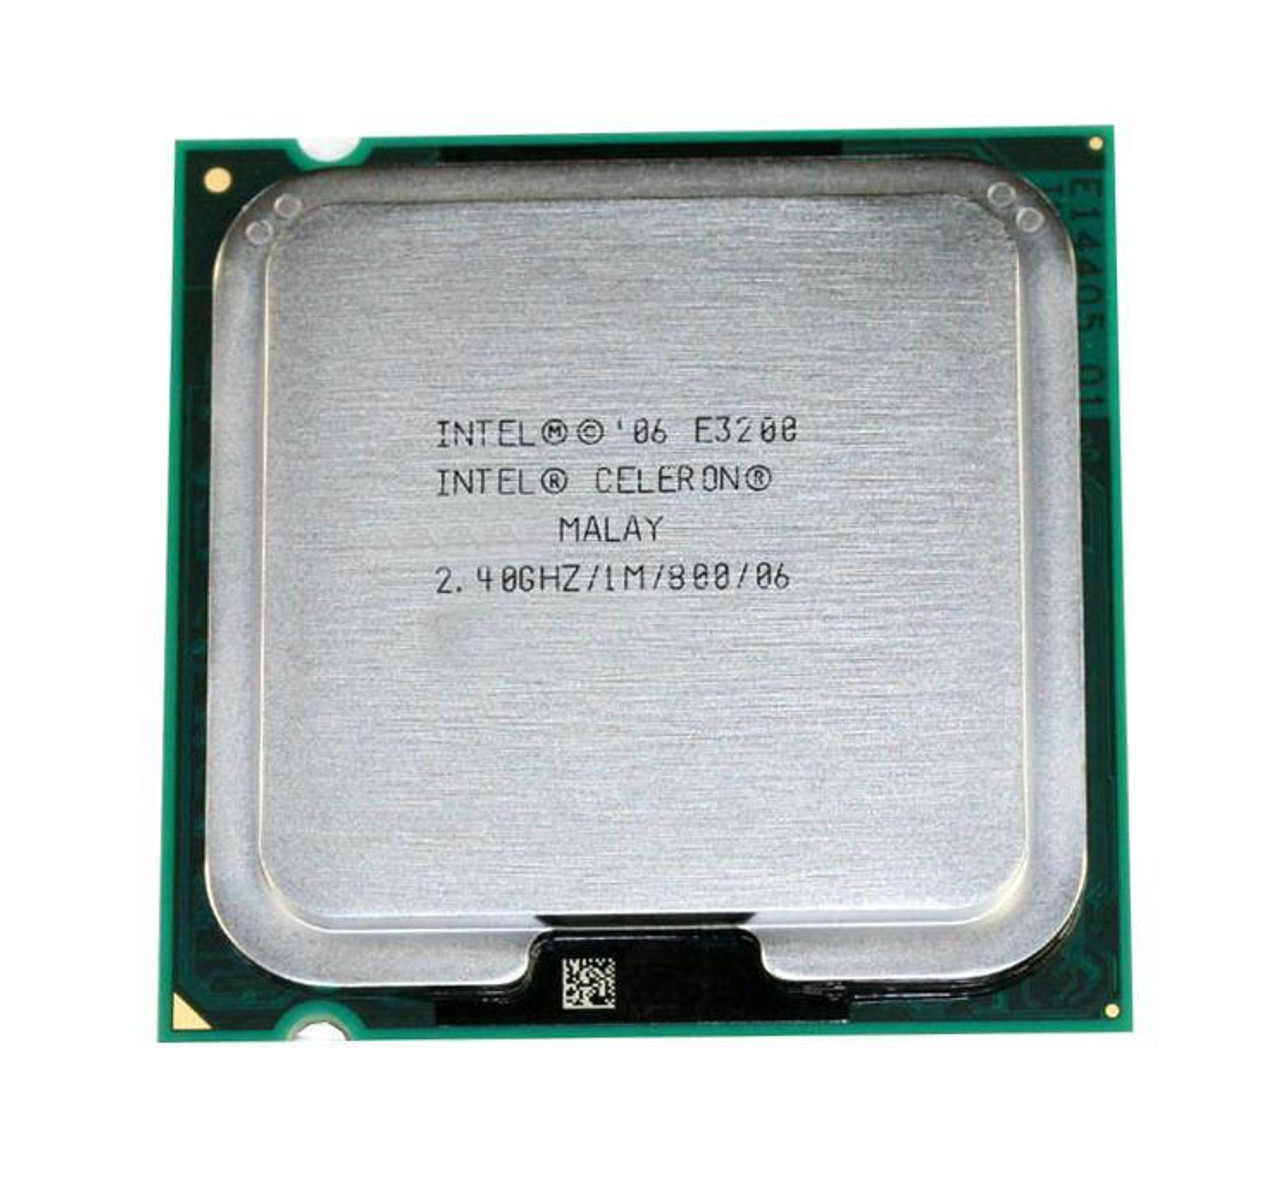 Dell 2.40GHz 800MHz FSB 1MB L2 Cache Socket LGA775 Intel Celeron E3200 Dual Core Desktop Processor Upgrade